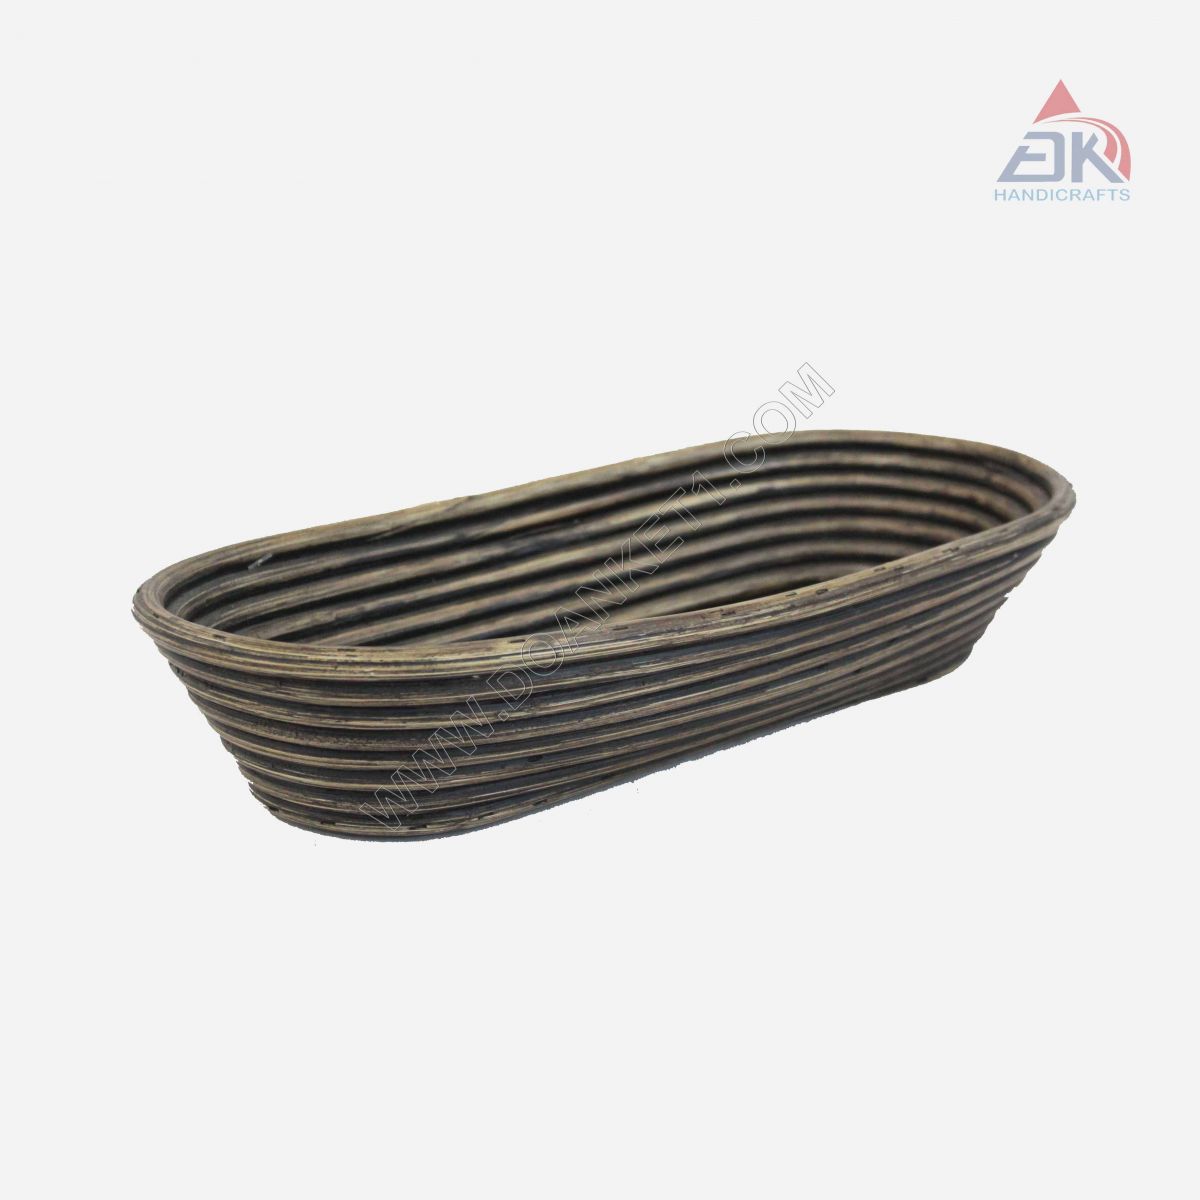 Rattan Coiled Basket # DK33